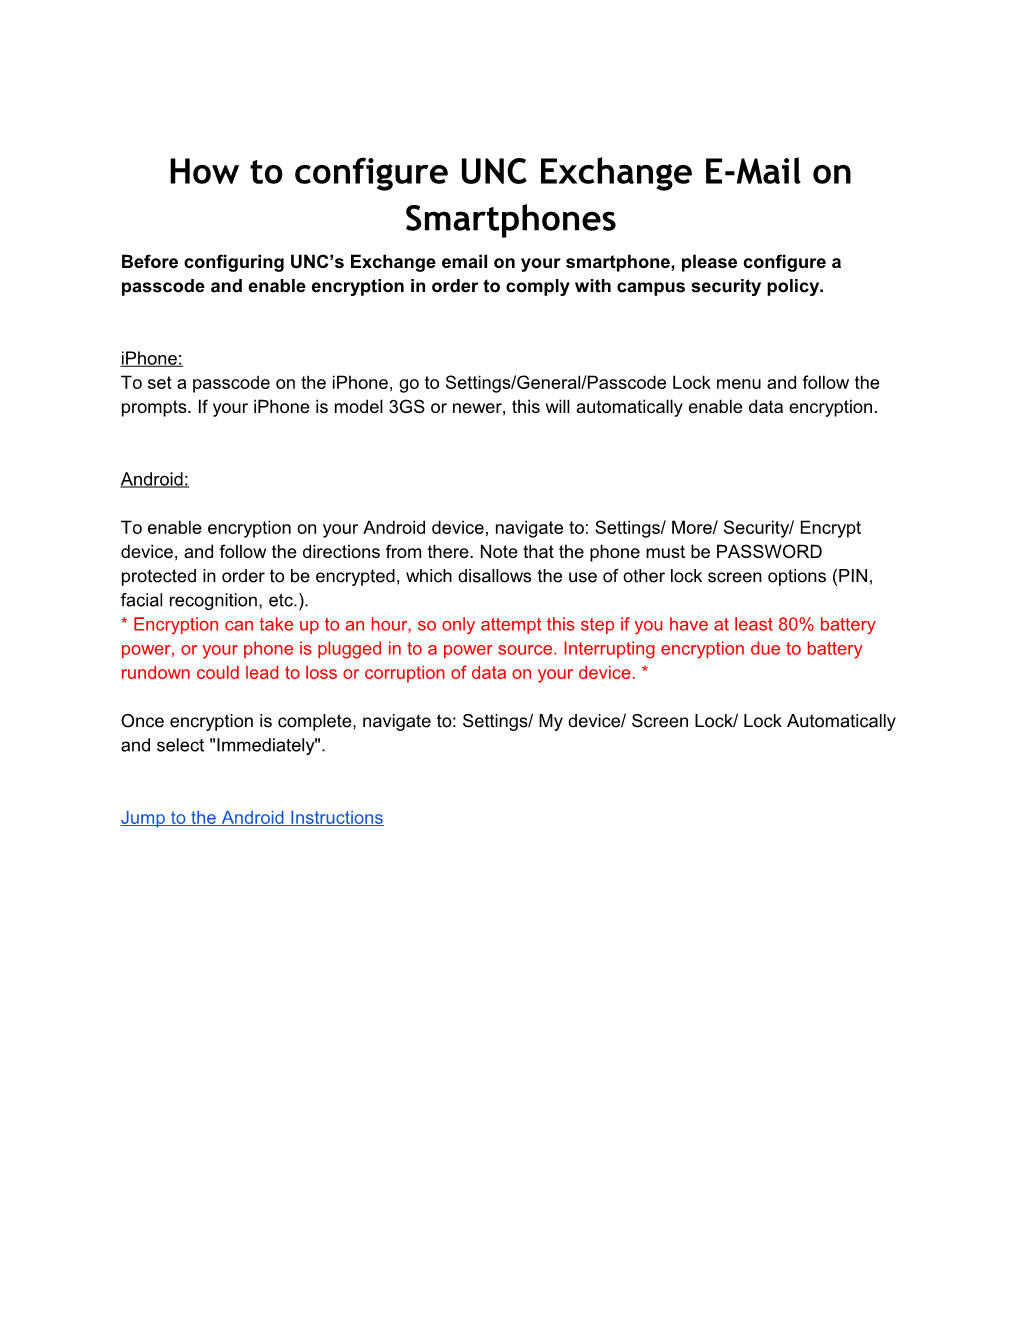 How to Configure UNC Exchange E-Mail on Smartphones